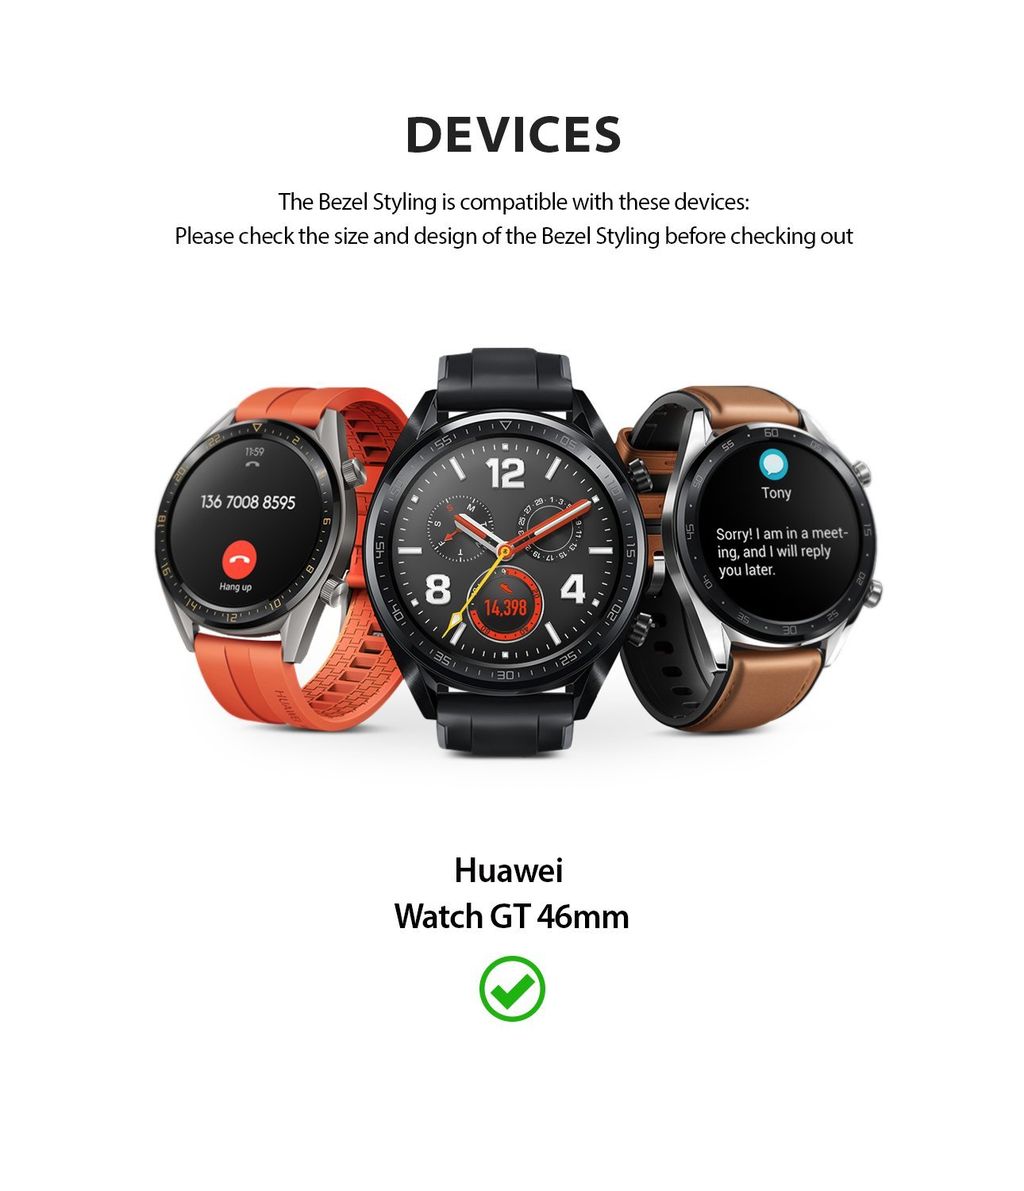 Ringke_Bezel_Styling_Huawei_Watch_GT_46mm_sub_thum_Devices_1400x.jpg